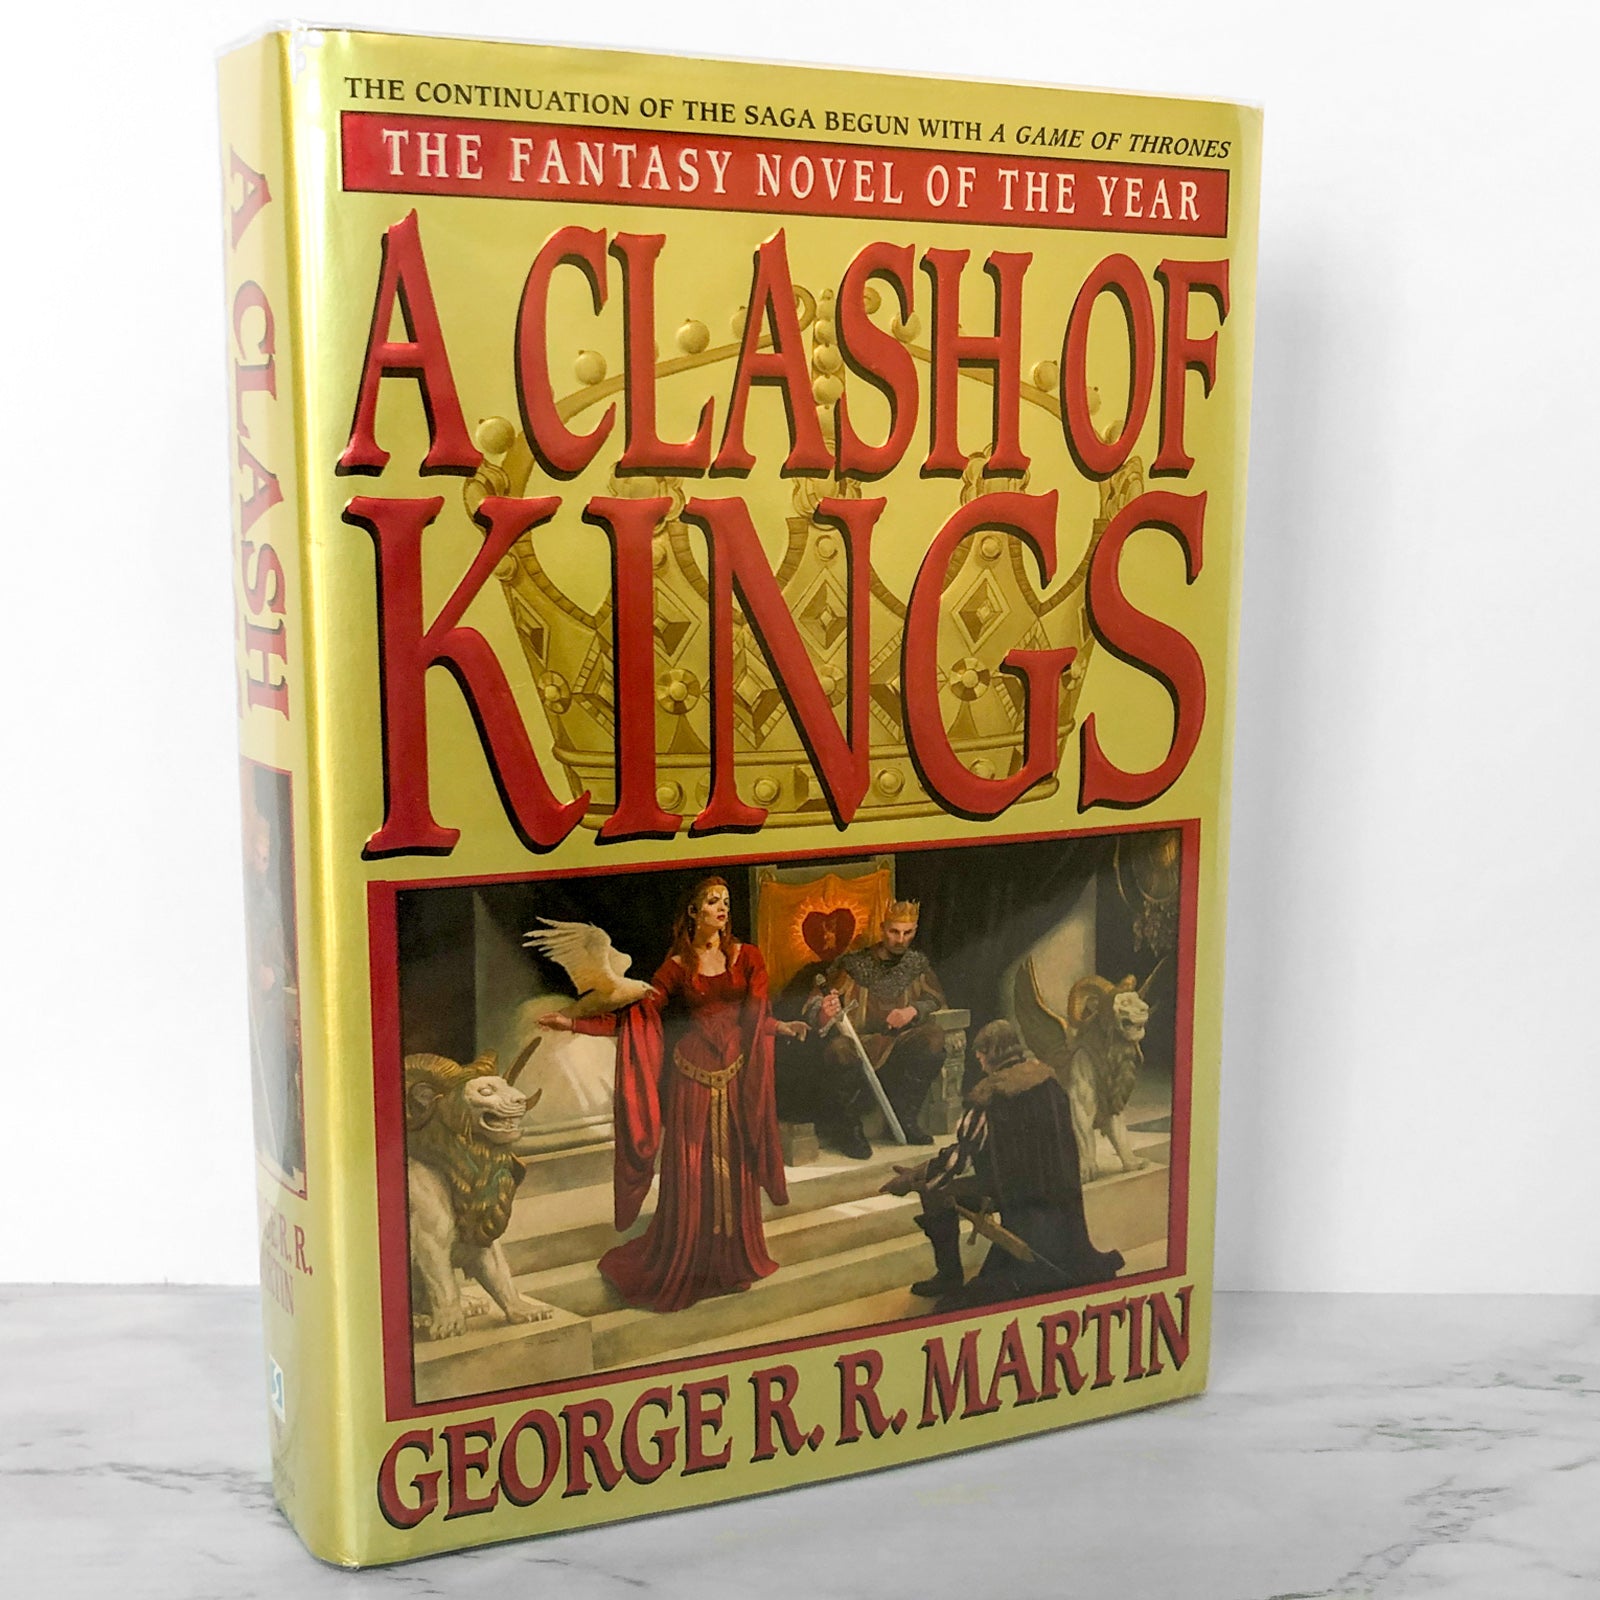 Publication: A Clash of Kings